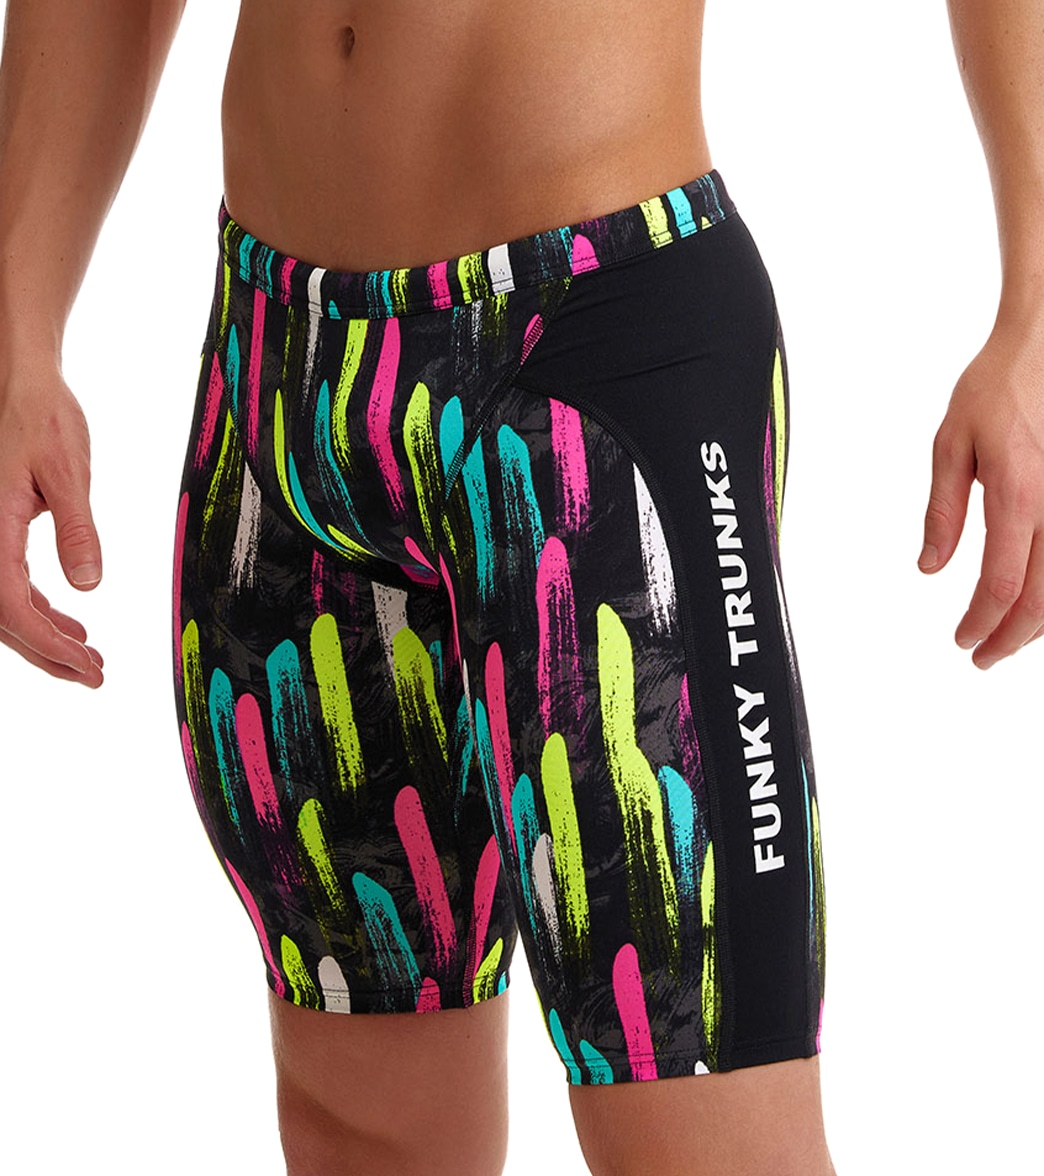 Funky Trunks Men's Lippie Launch Training Jammer Swimsuit - 30 Polyester - Swimoutlet.com